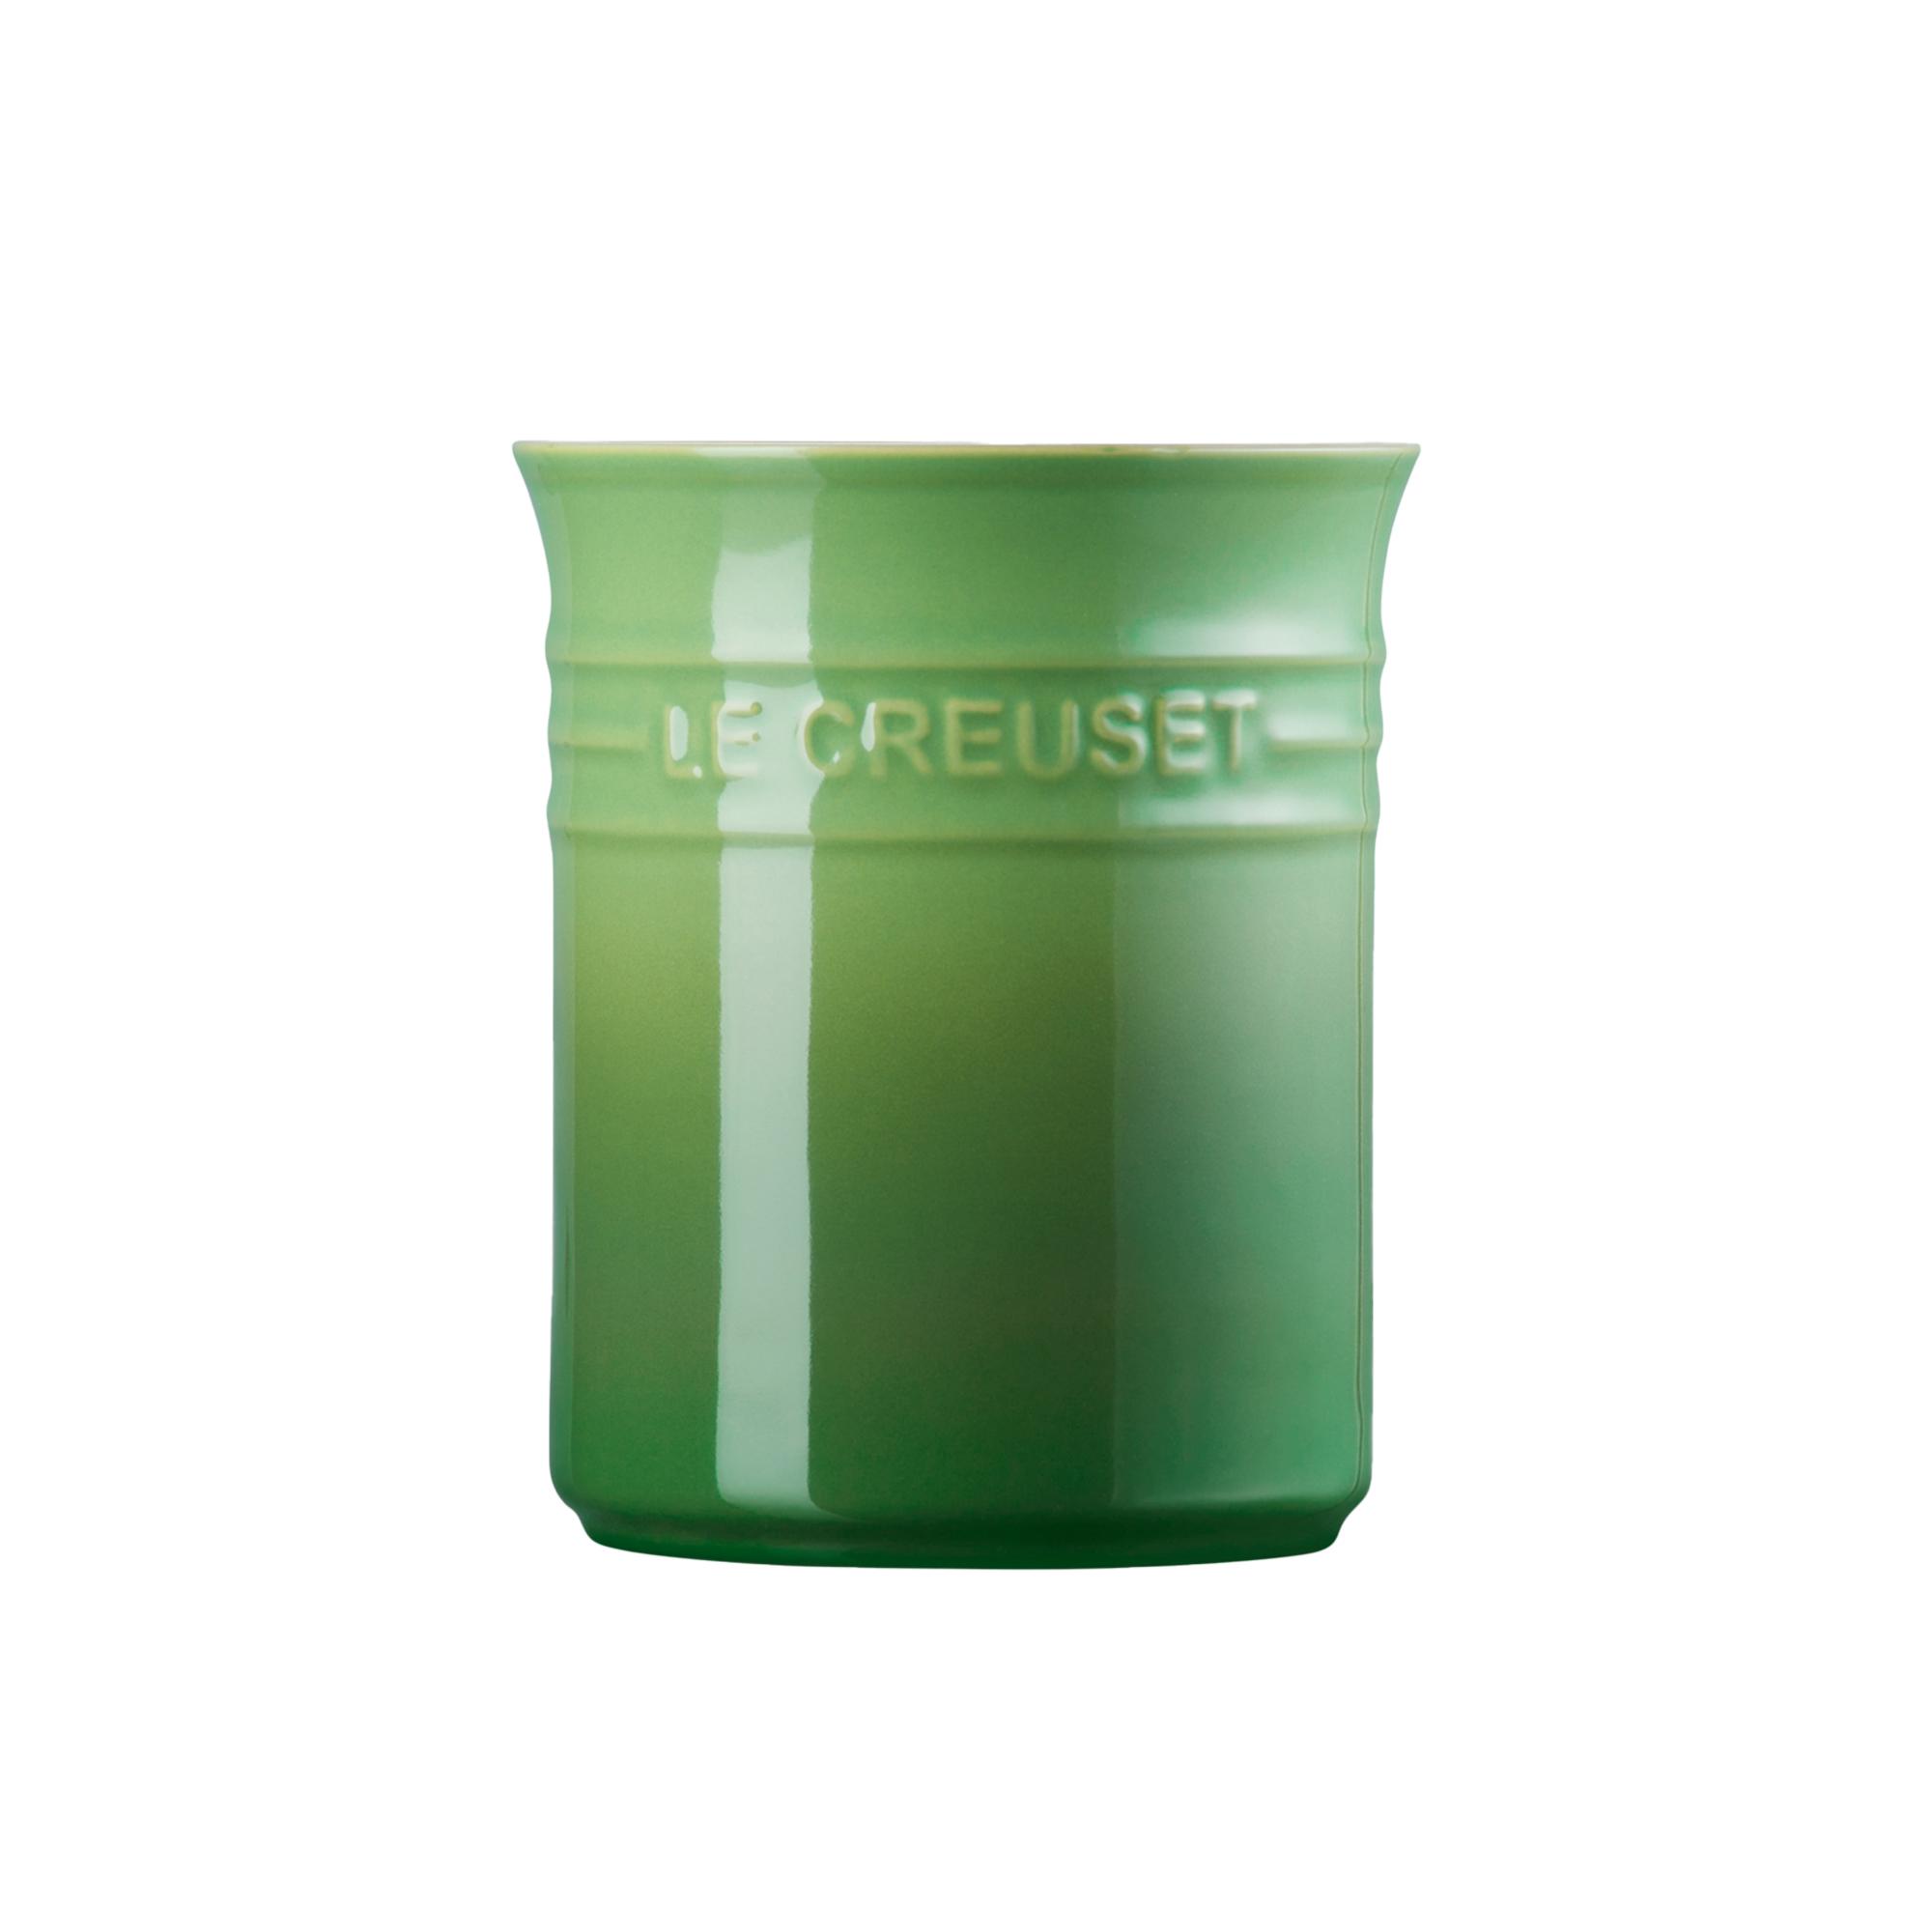 Le Creuset Stoneware Utensil Jar Small Bamboo Green Image 3